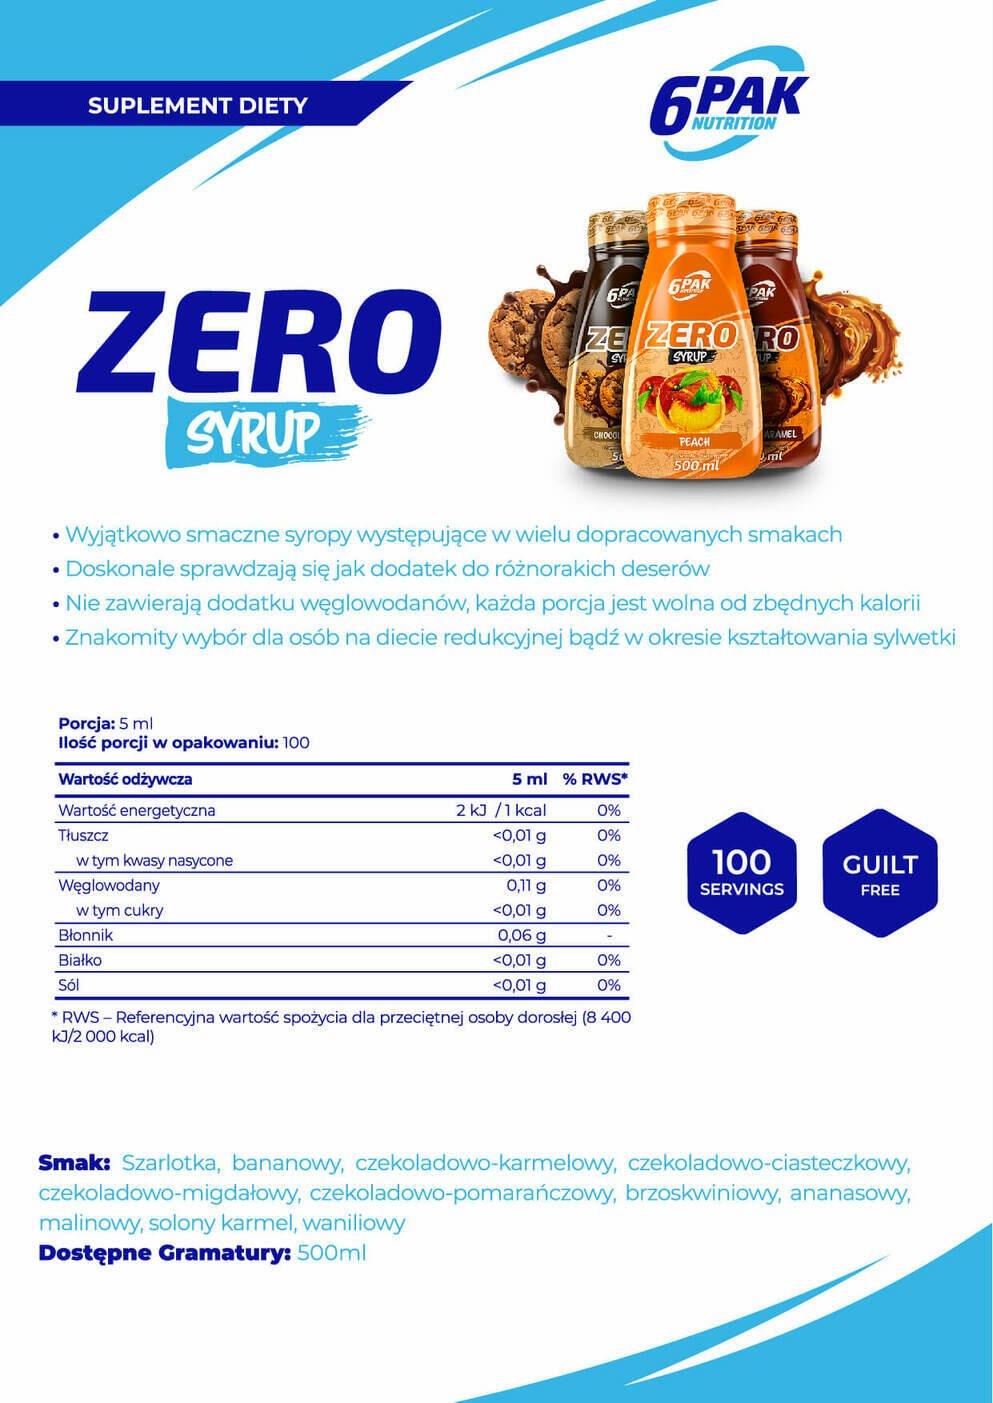 6PAK Nutrition Syrup ZERO Chocolate-Caramel - 500ml